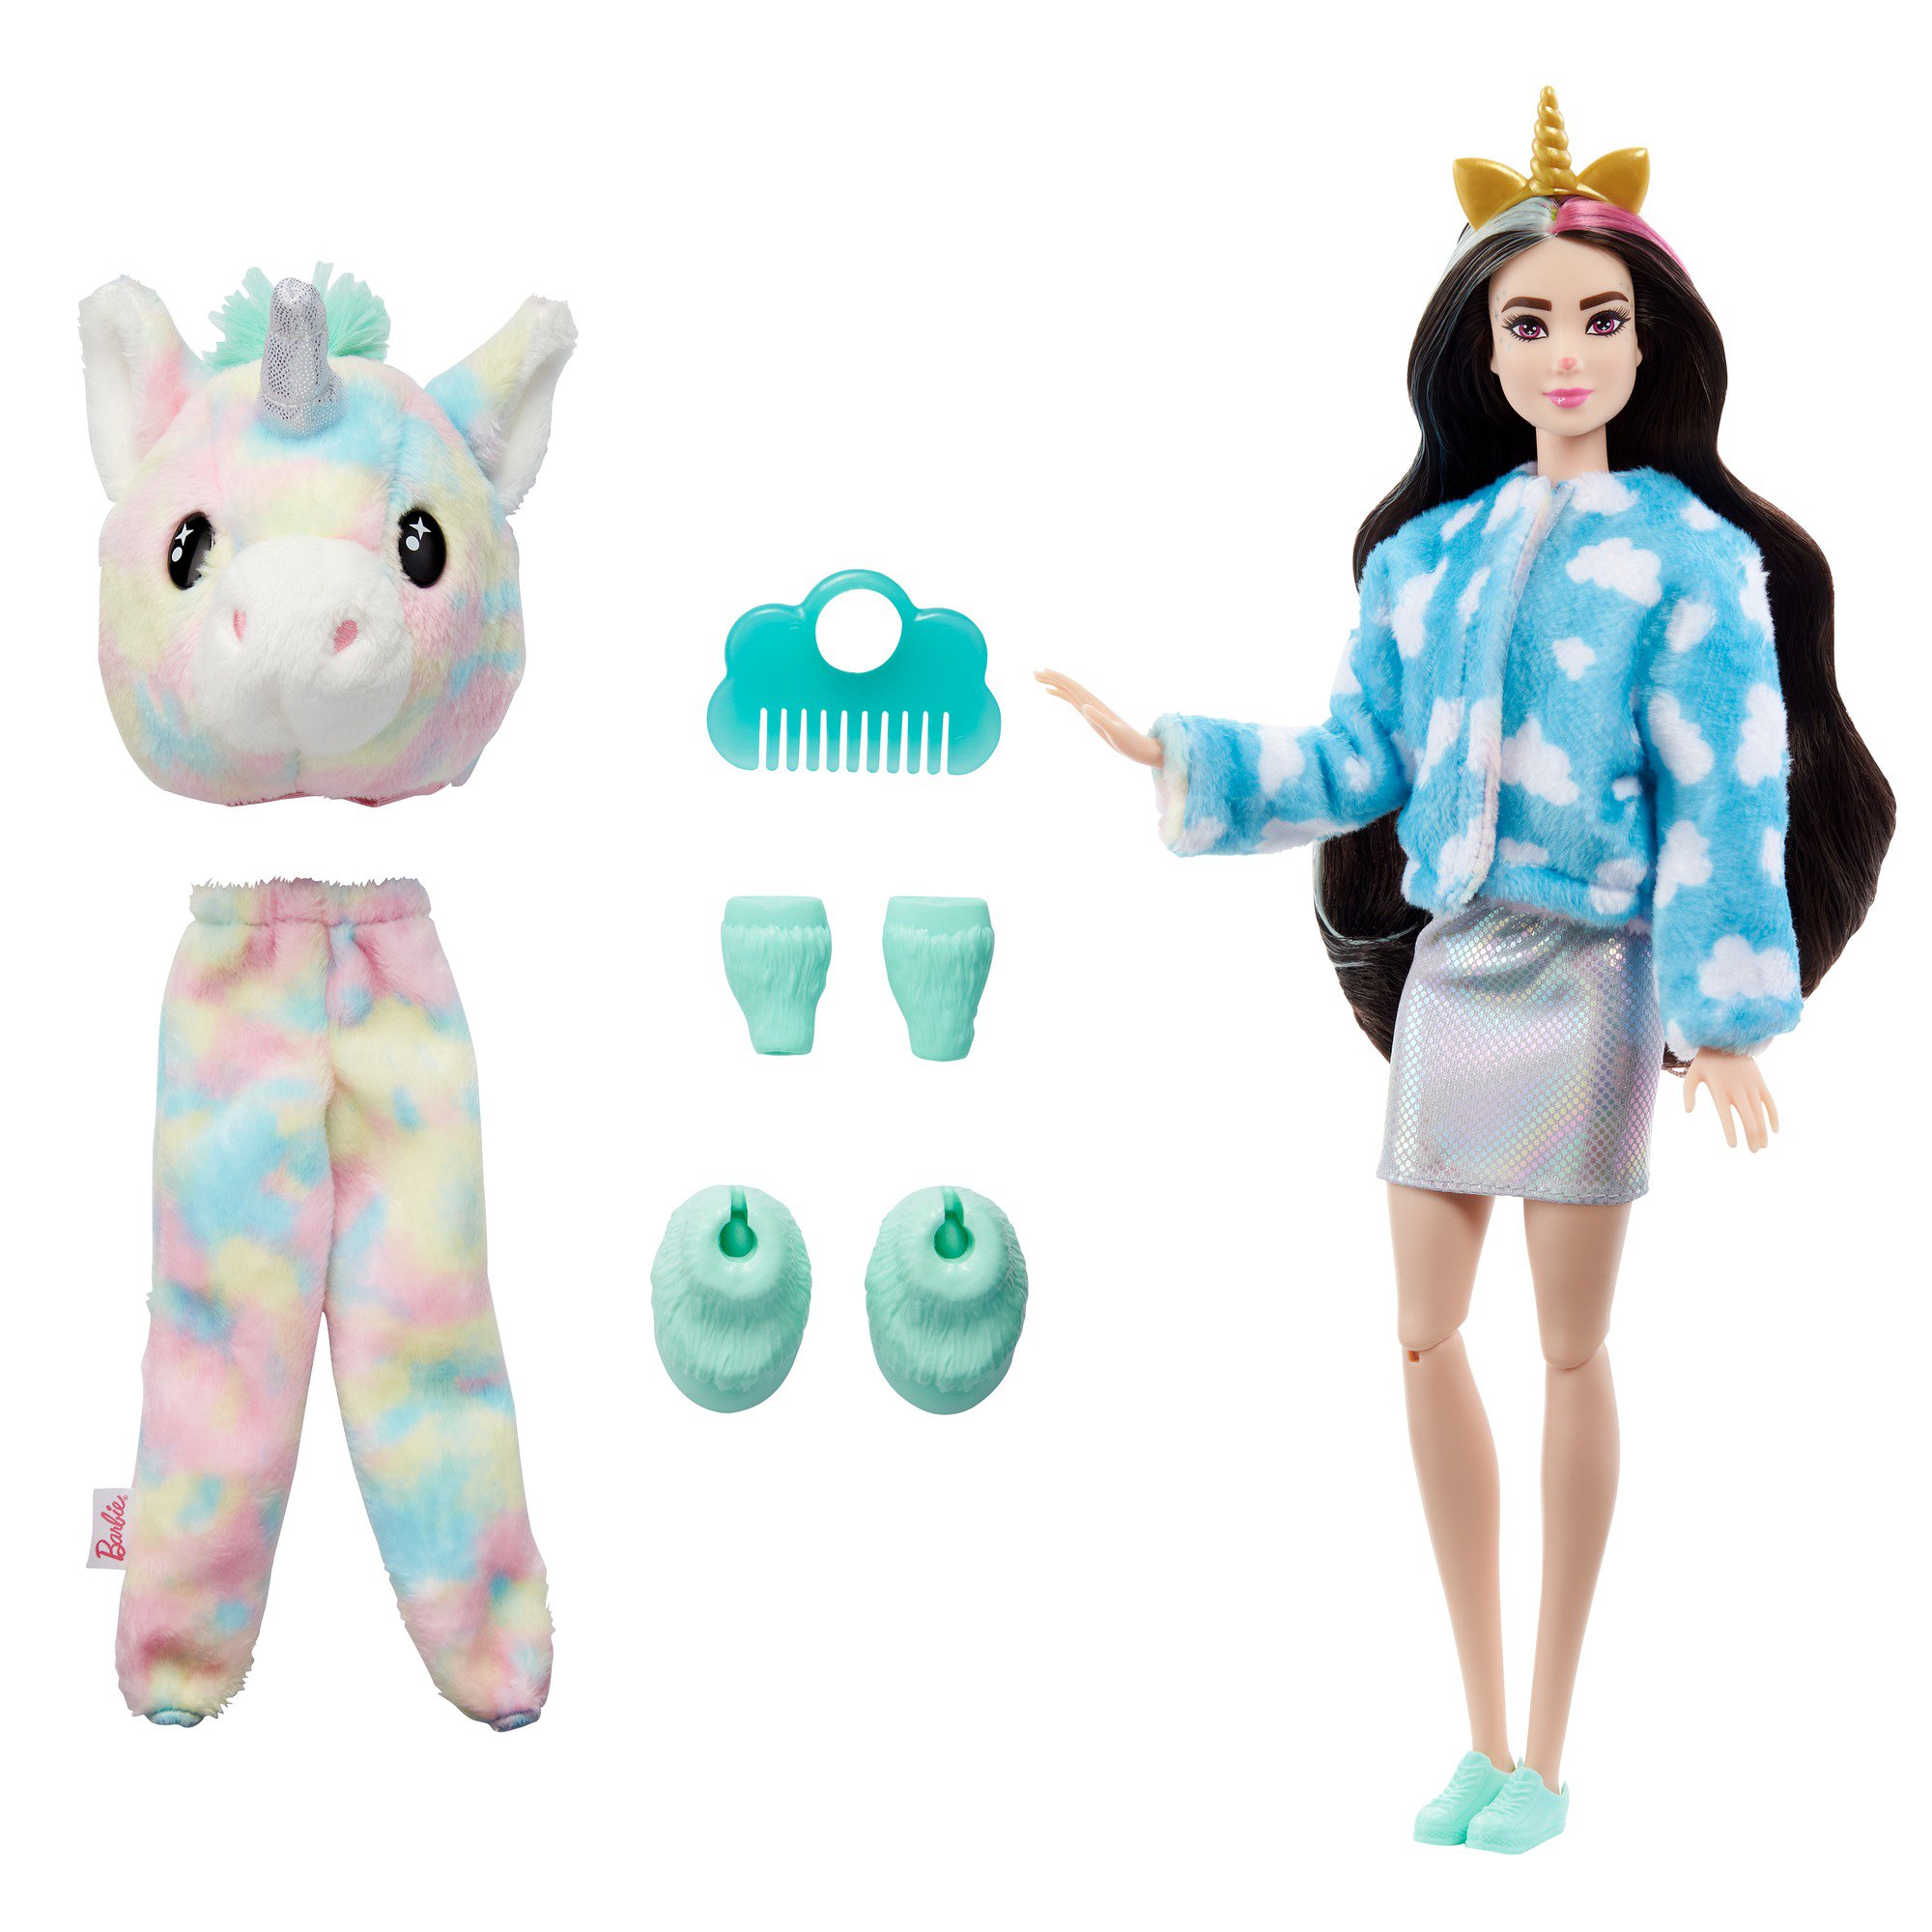 Barbie Cutie Reveal Fantasy Series Doll with Unicorn Plush Costume - Shop  Toys at H-E-B